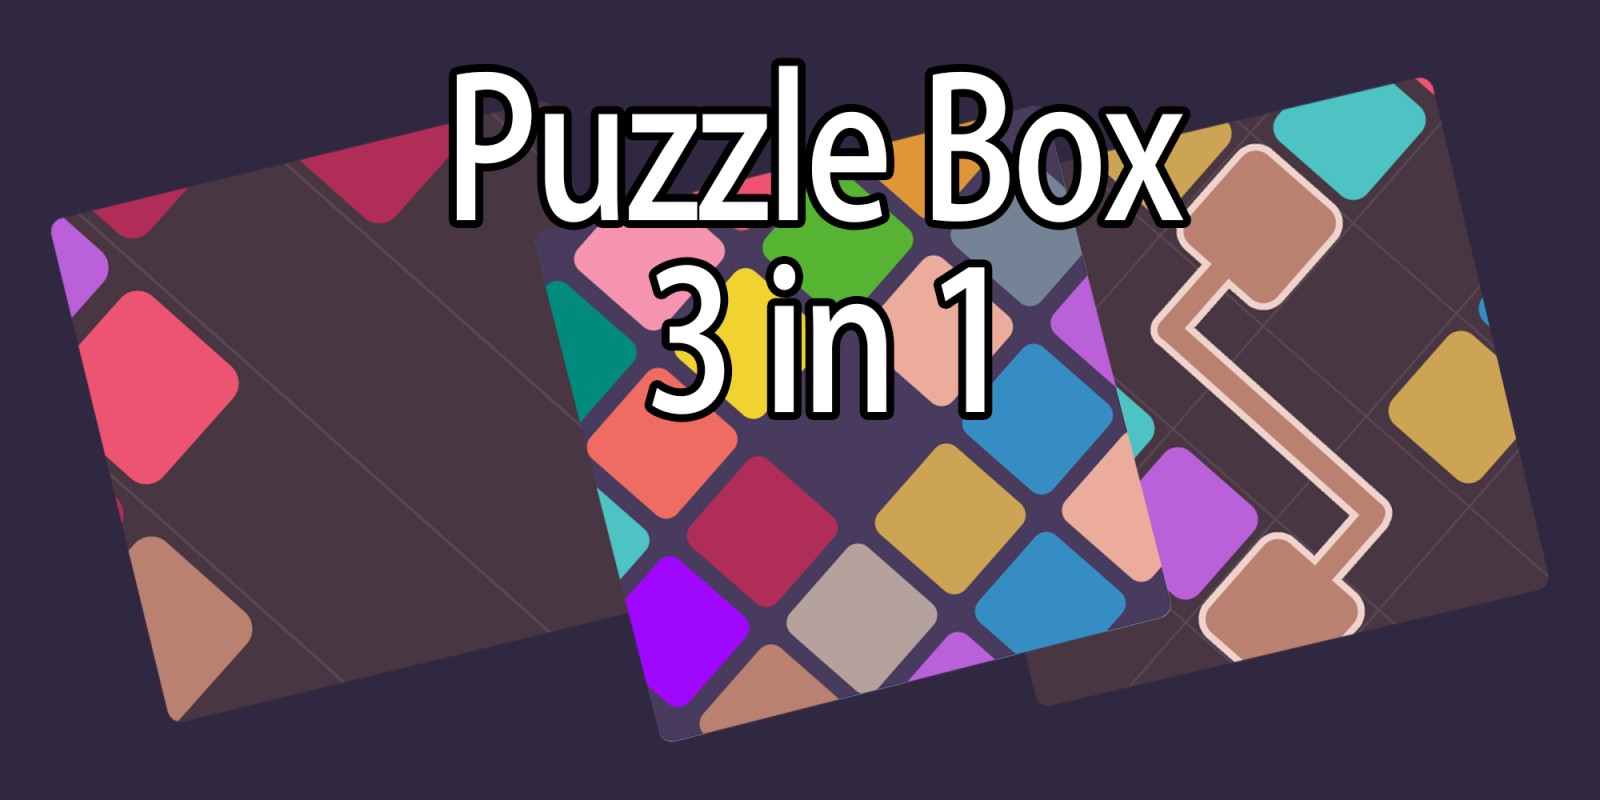 Puzzle Box 3 in 1